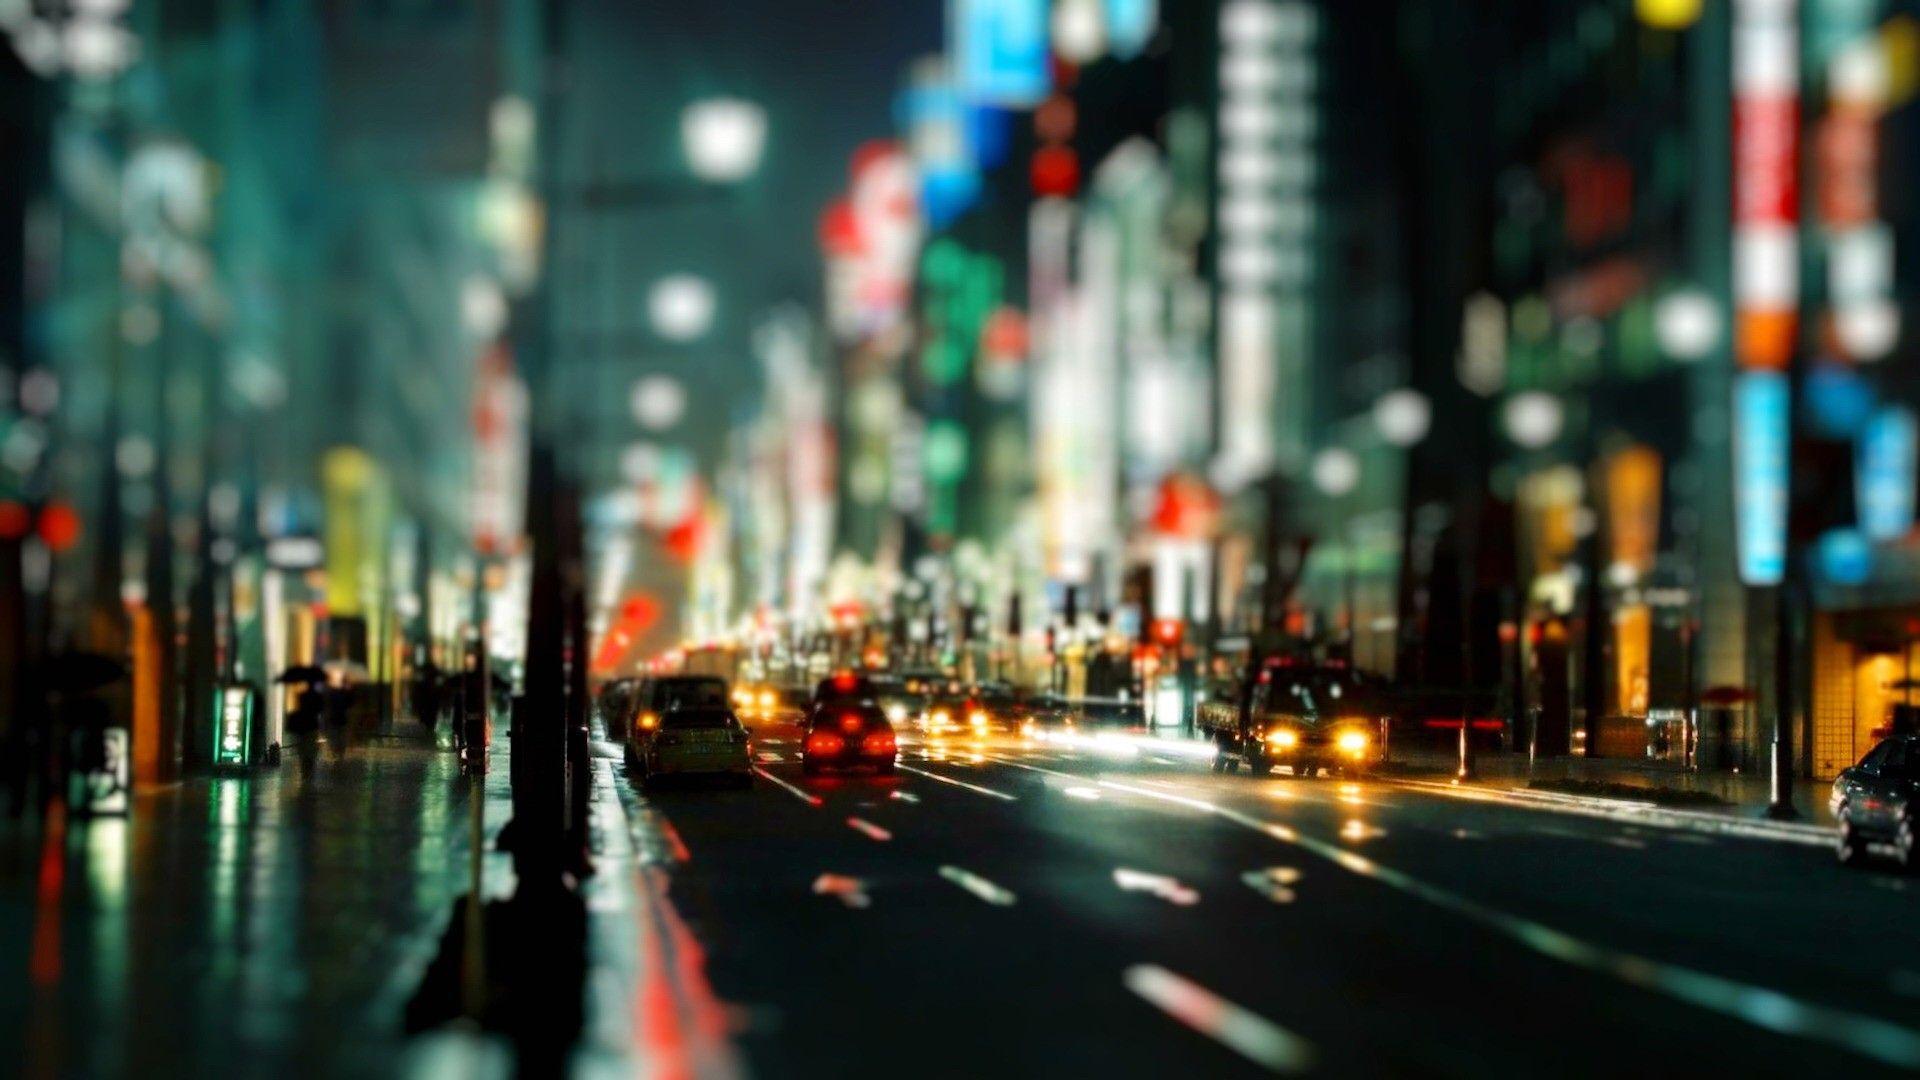 AmazingPict.com. City Lights Wallpaper Blurred